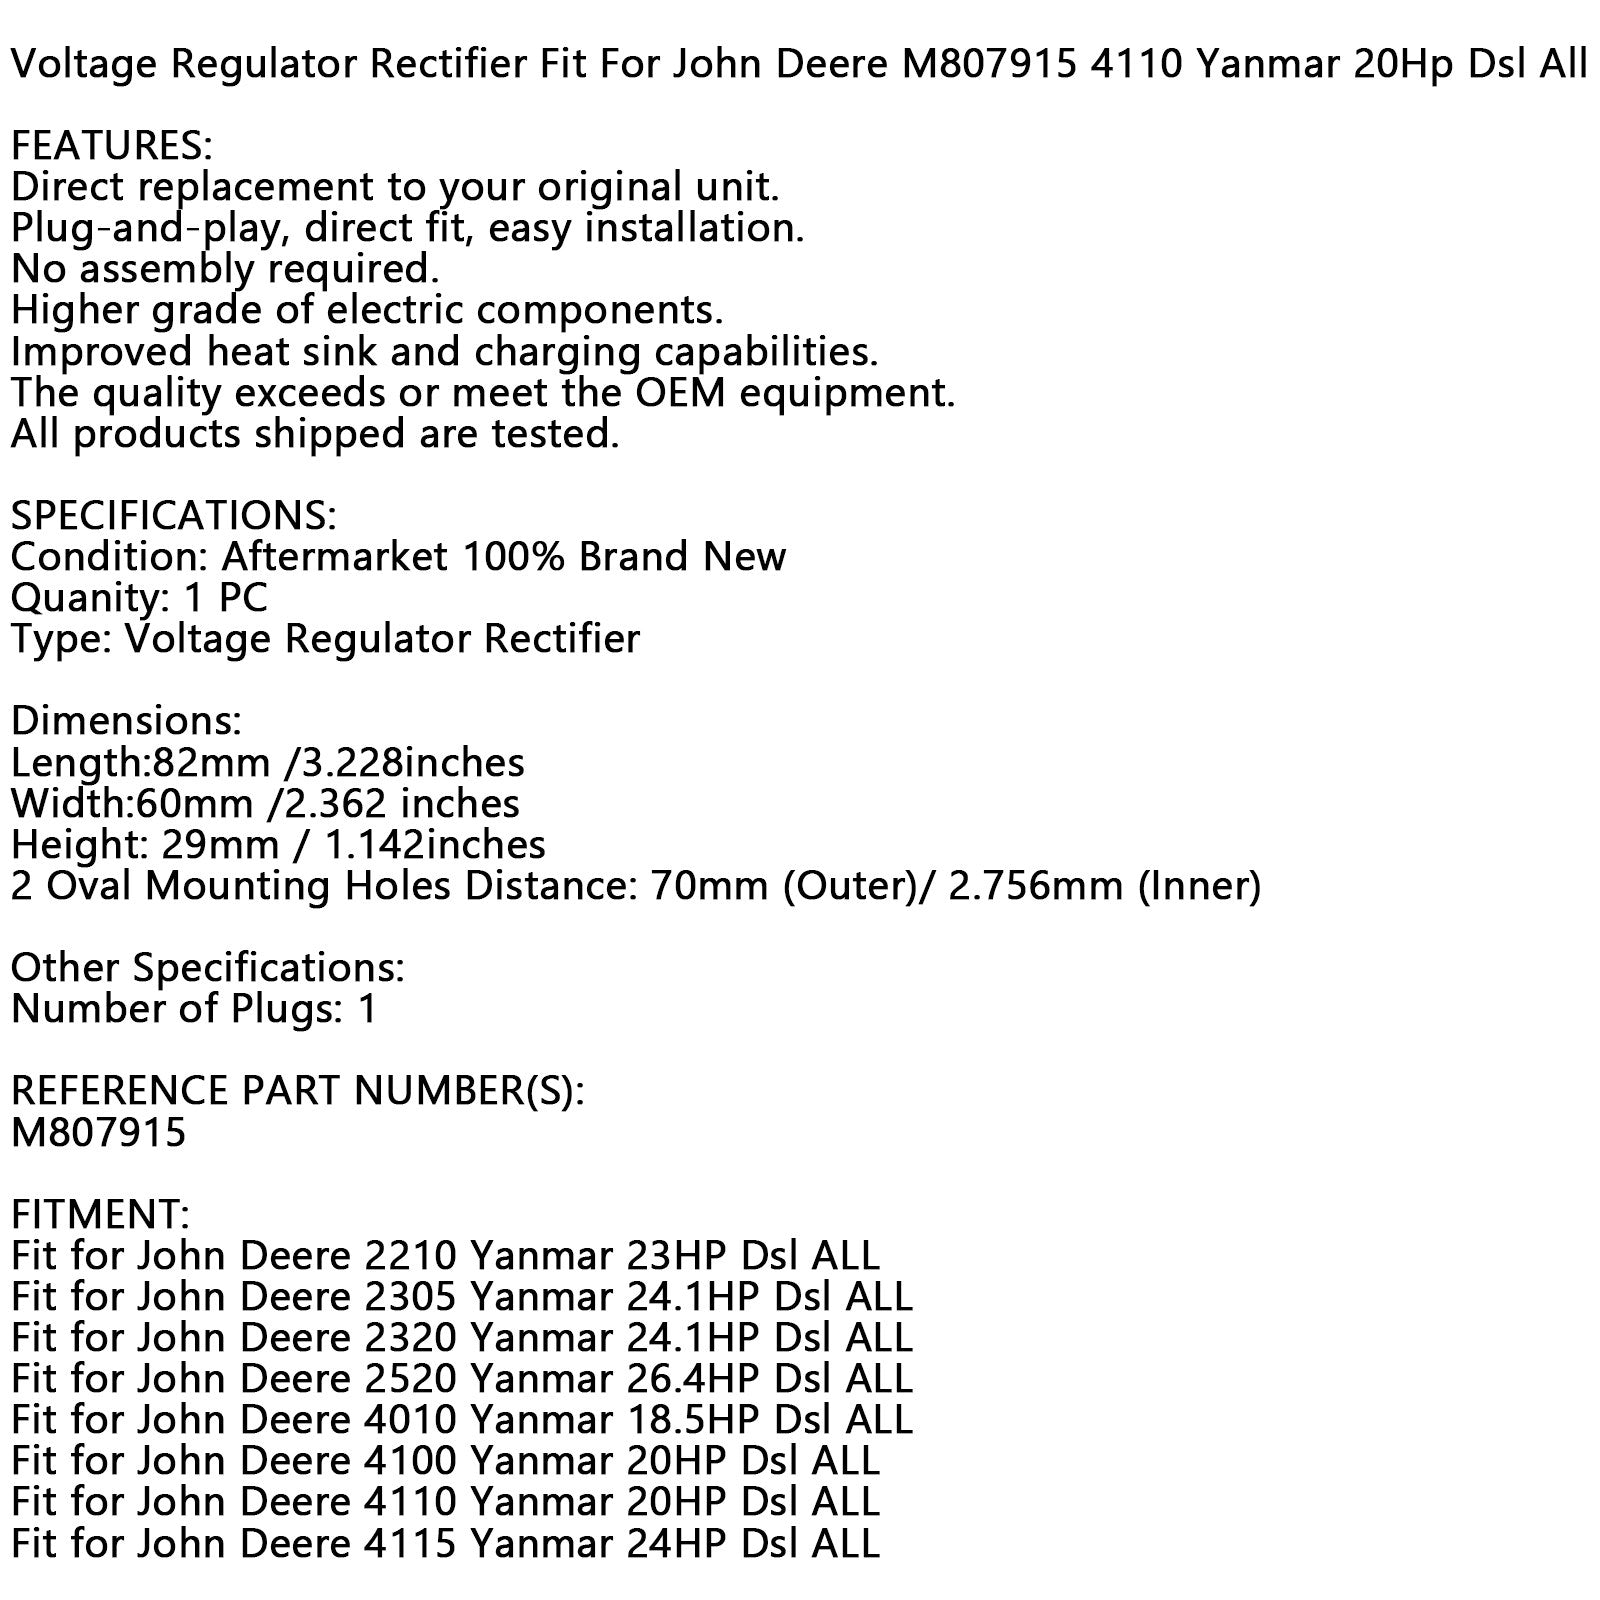 Spannungsregler passend für John Deere 2320 Yanmar 24.1Hp 4115 Yanmar 24Hpdsl All Generic